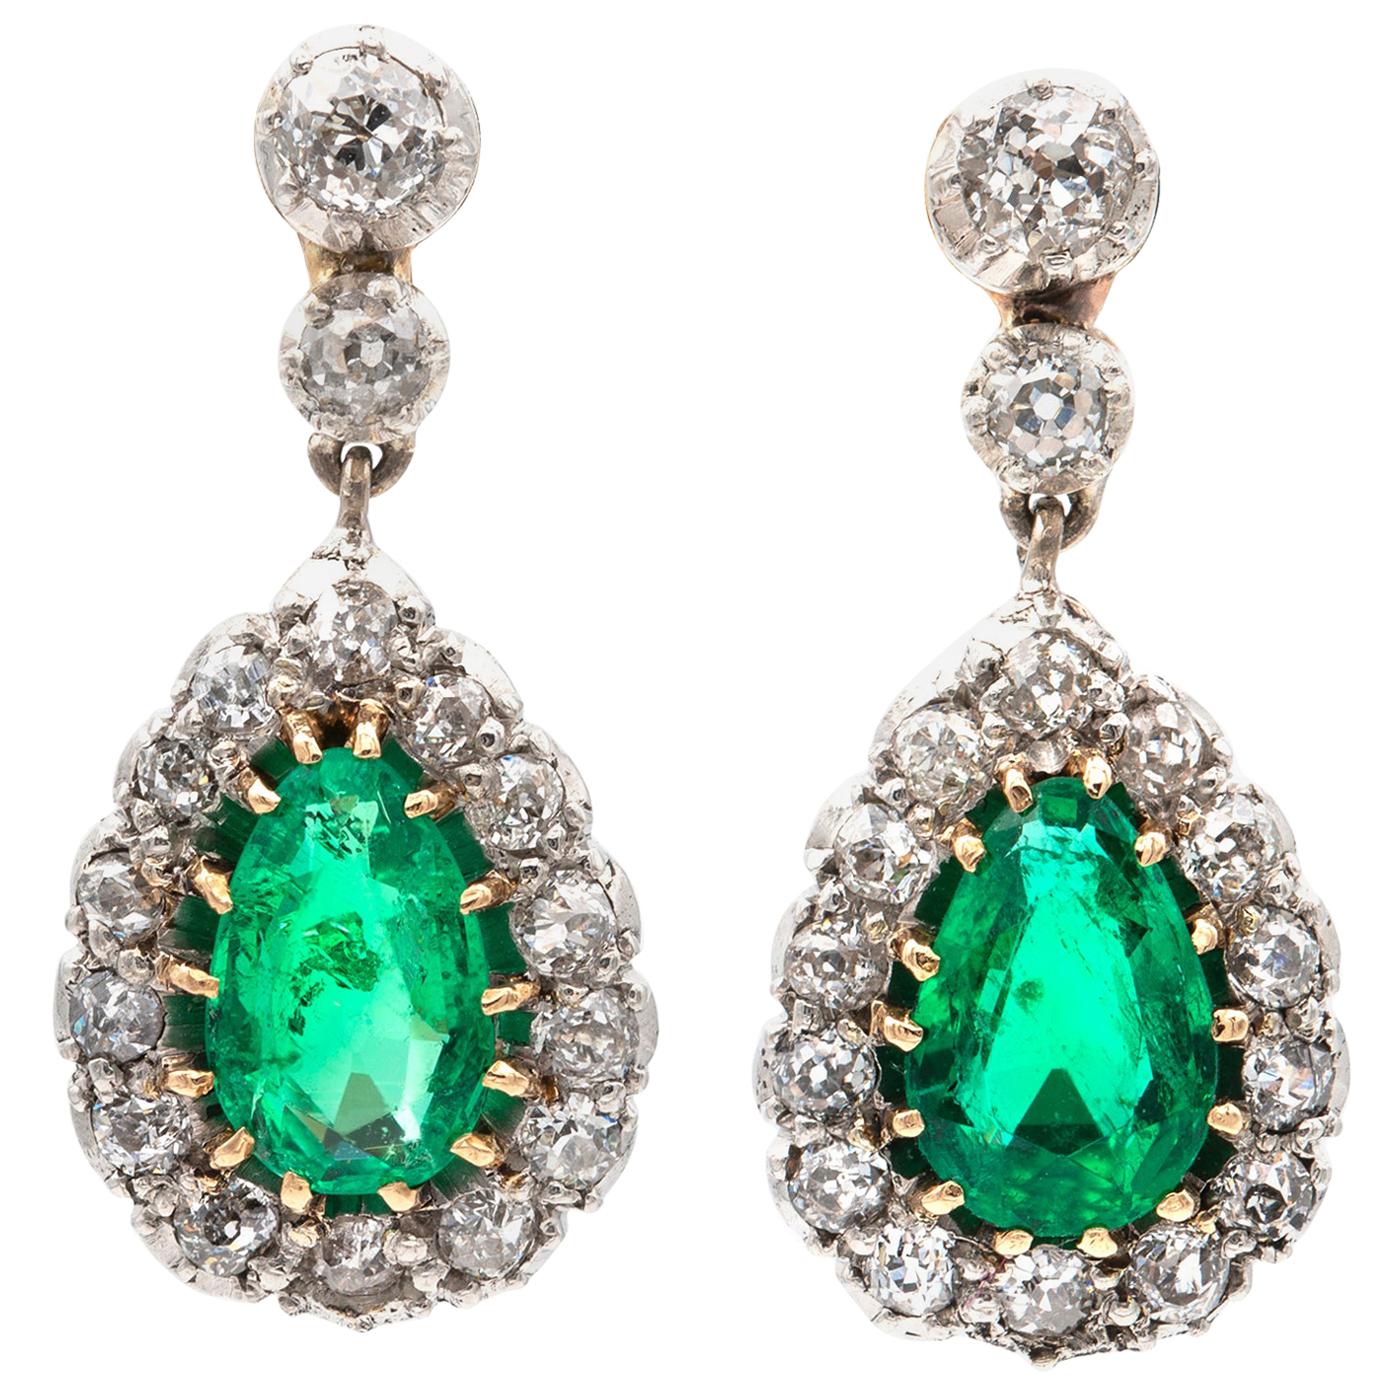 Pair of Edwardian Emerald and Diamond Drop Earrings